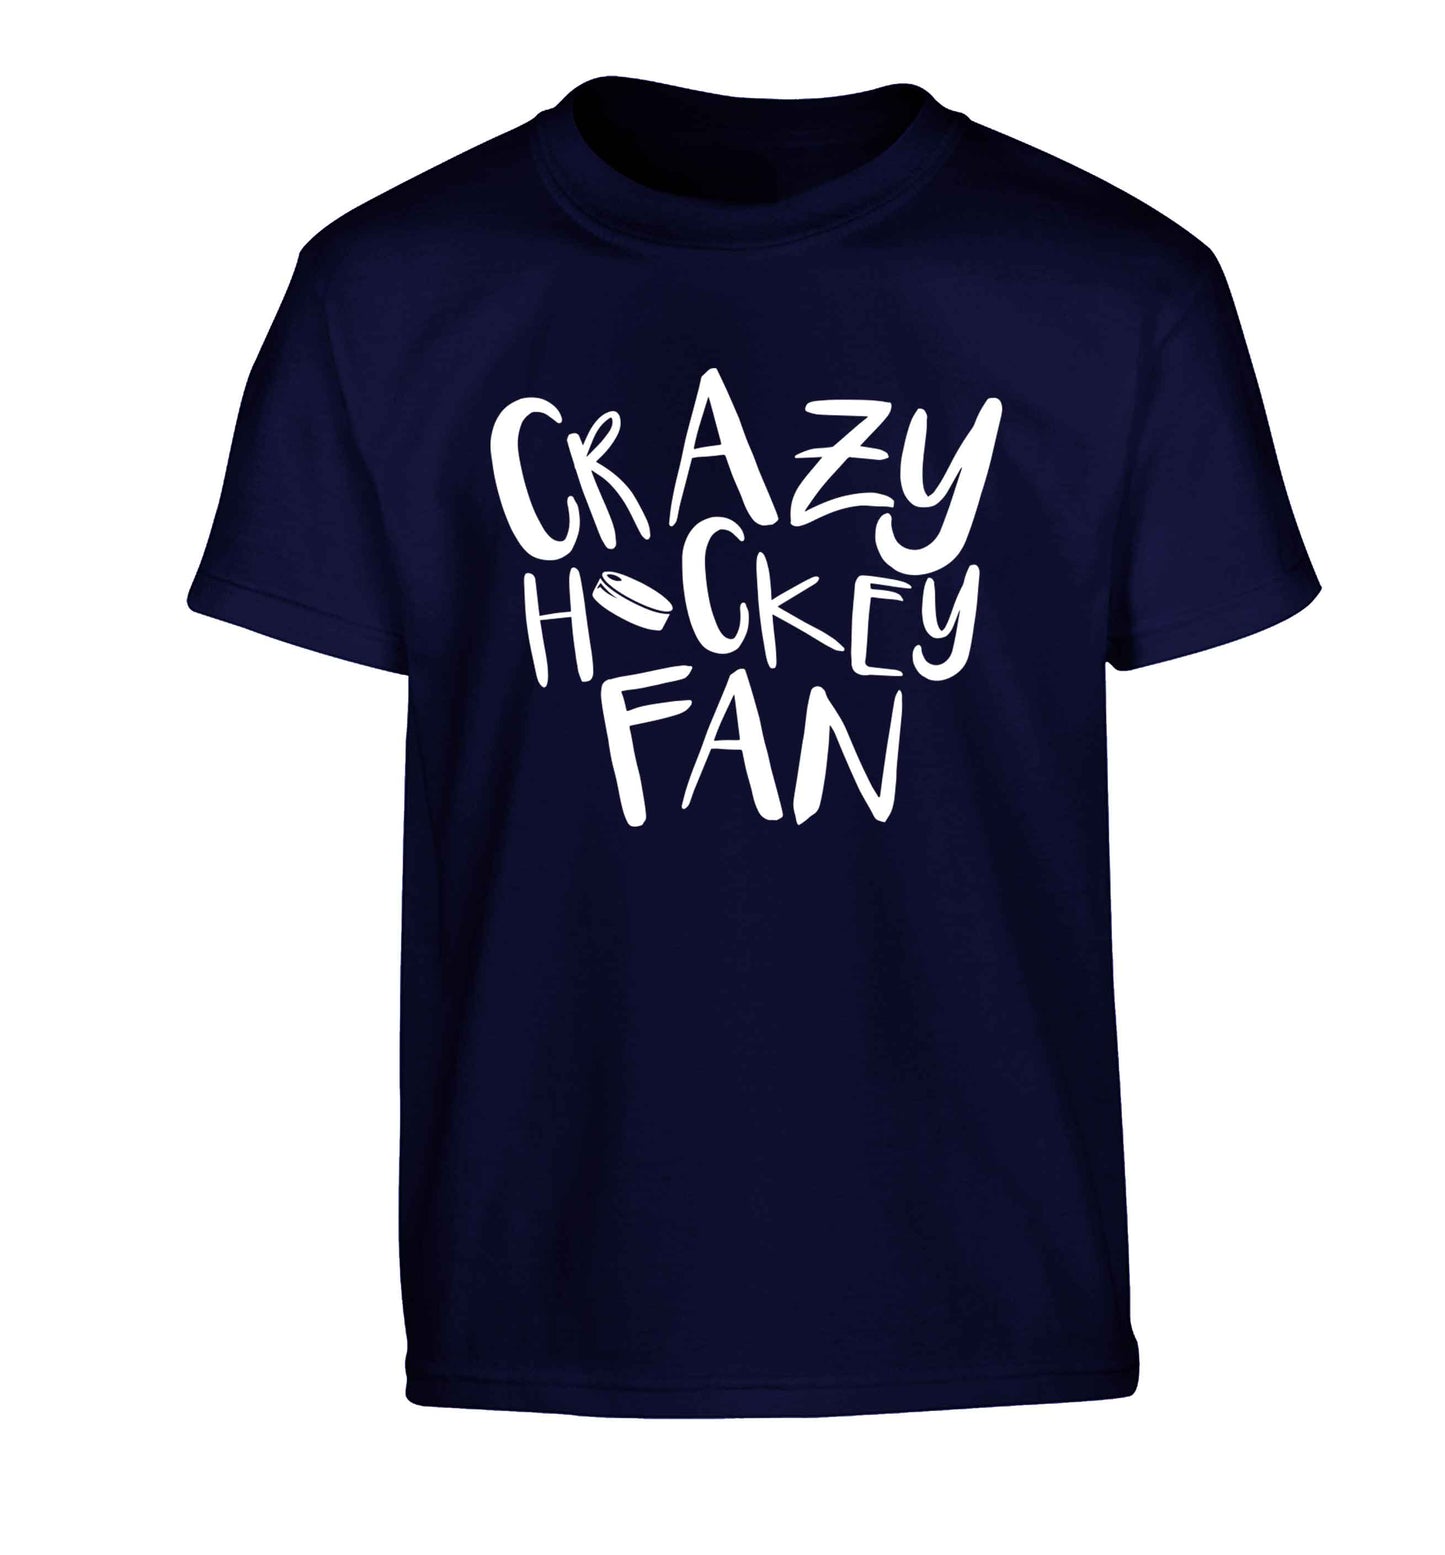 Crazy hockey fan Children's navy Tshirt 12-13 Years